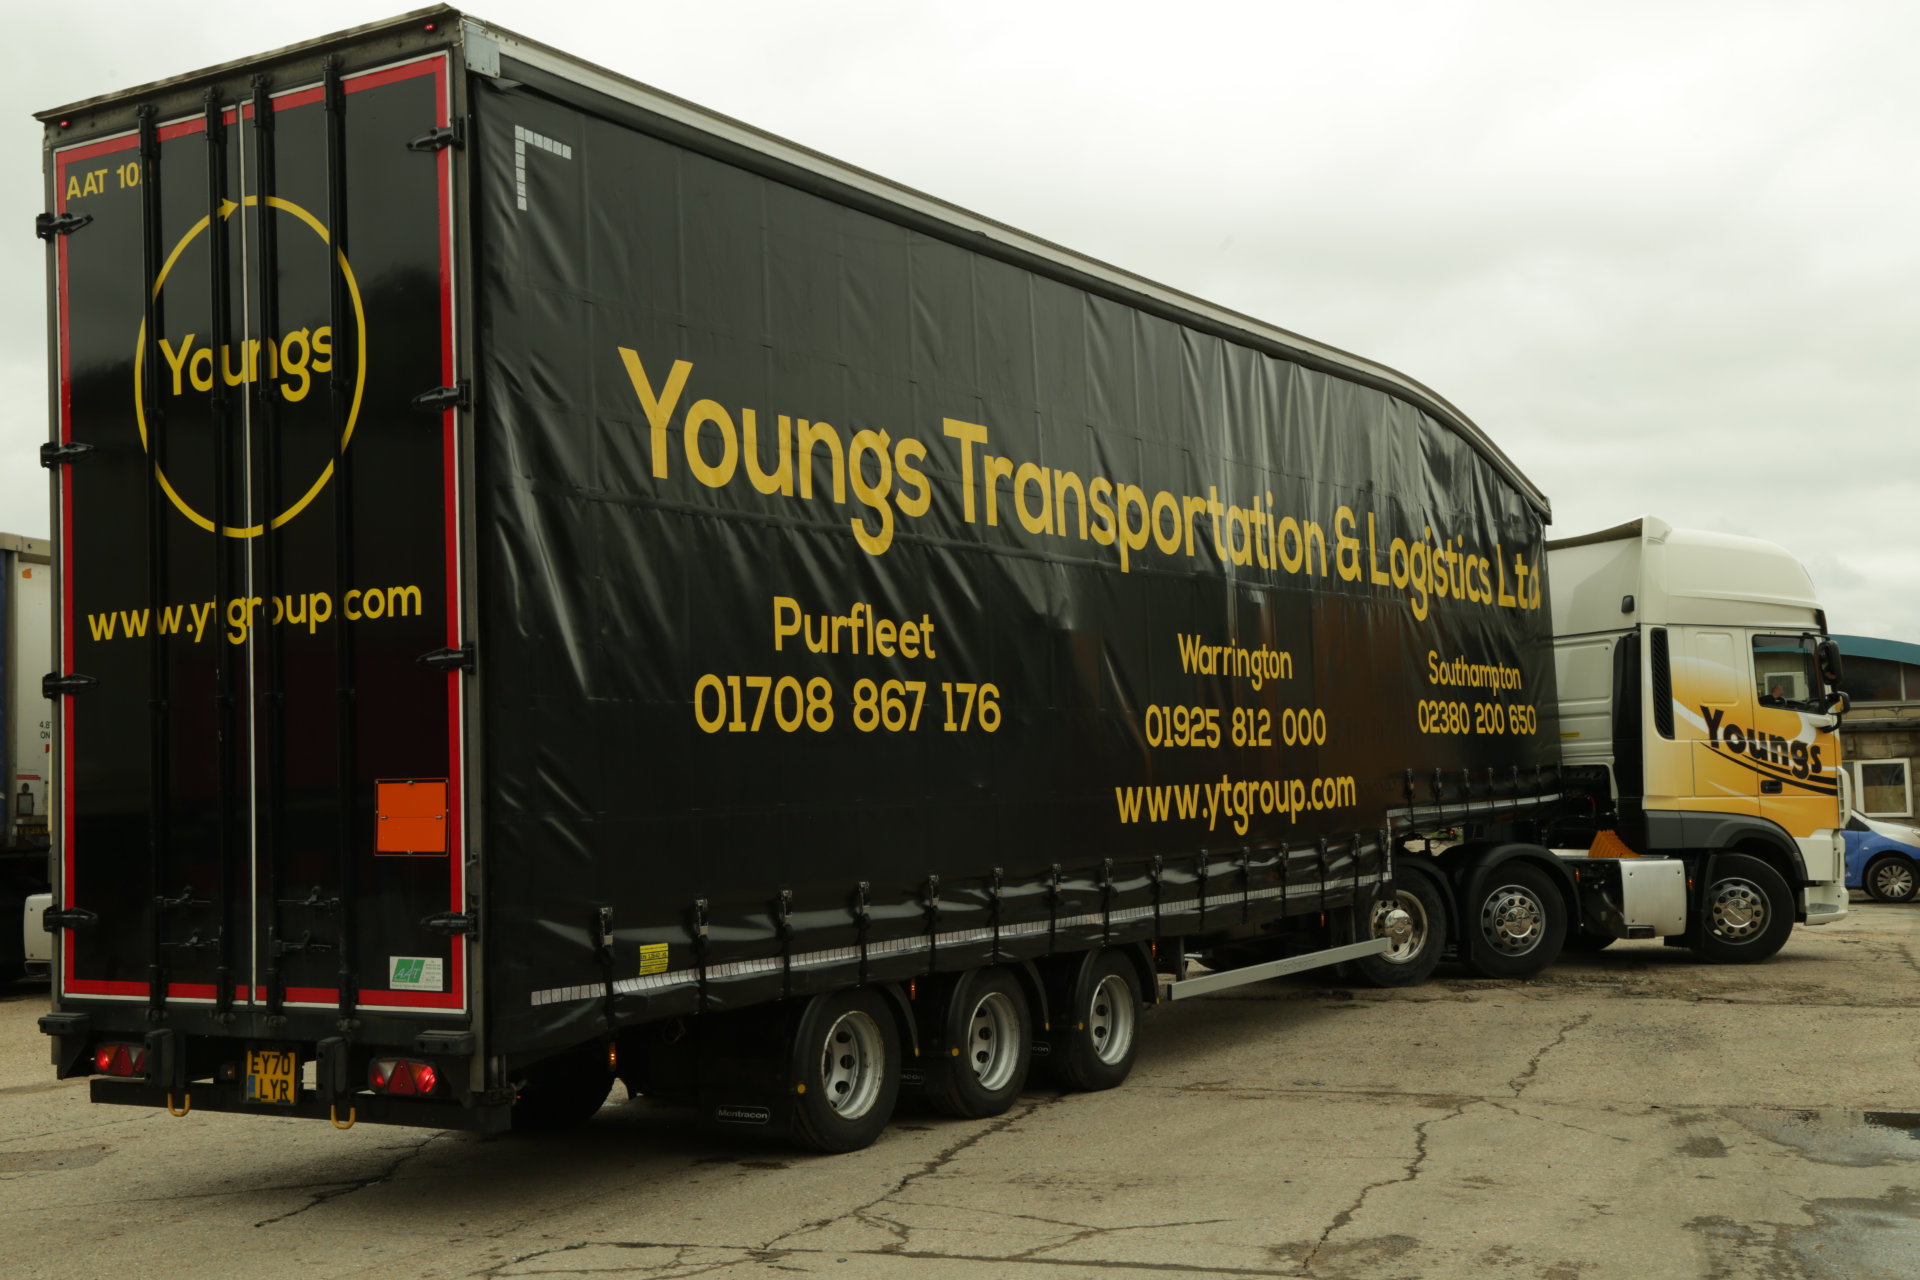 General Warehousing - Youngs Transport & Logistics